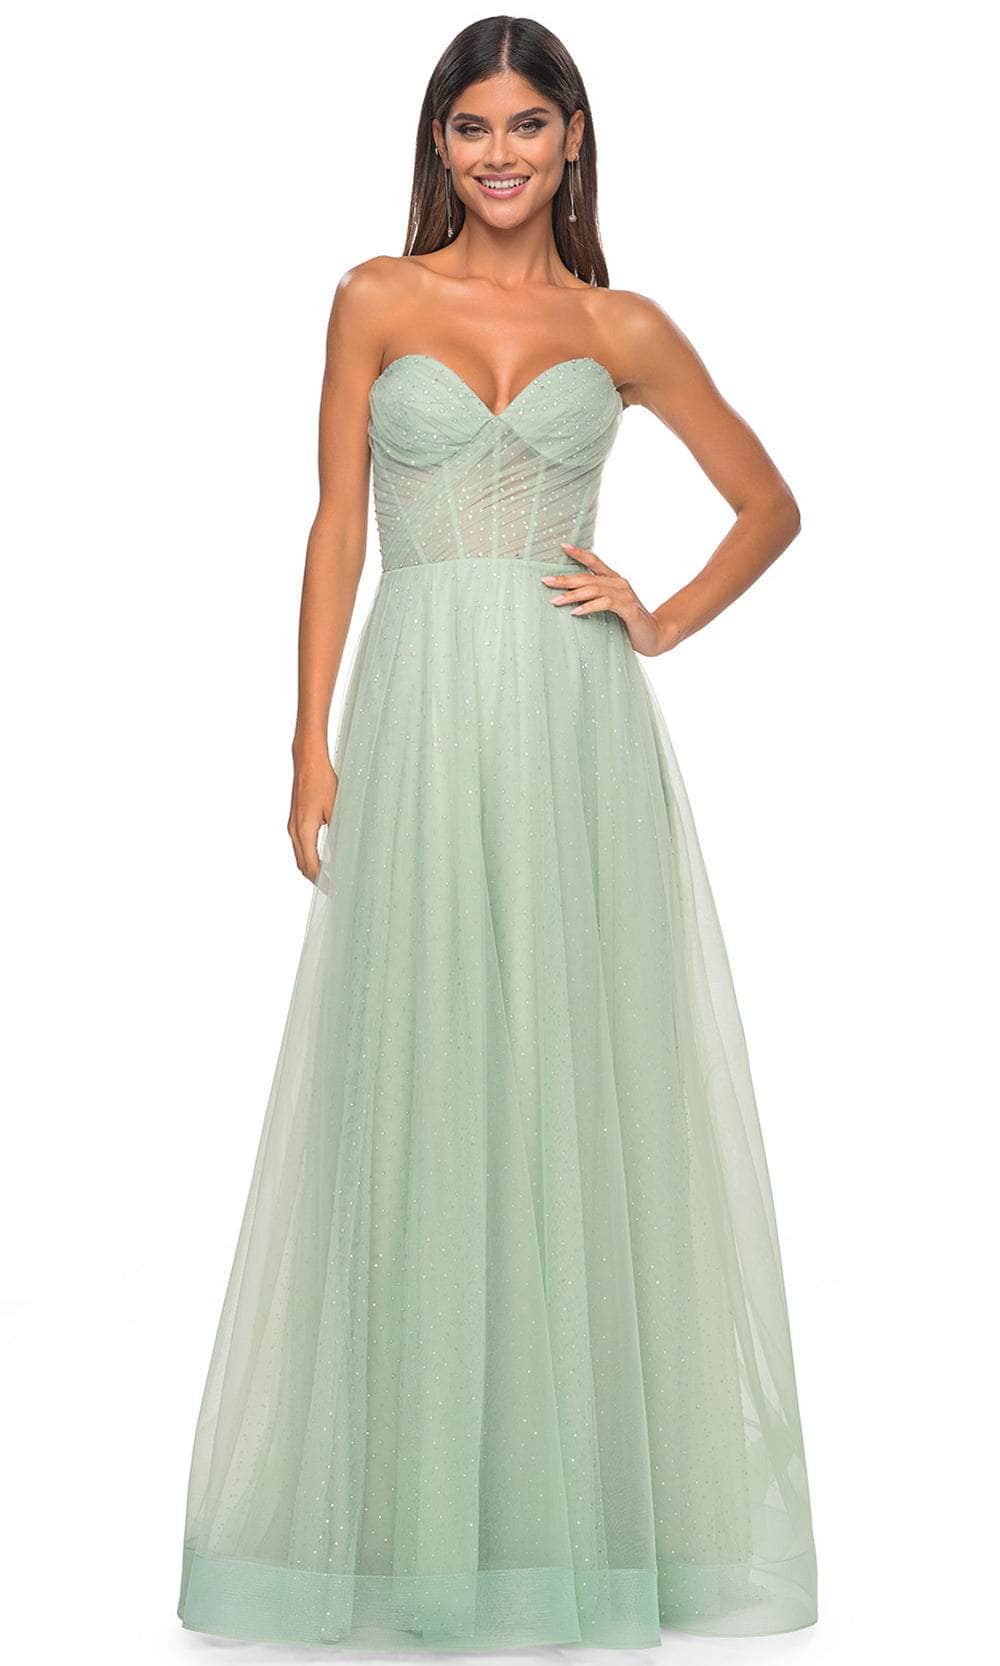 La Femme 31997 - Sweetheart Corset Prom Dress Special Occasion Dress 00 / Sage